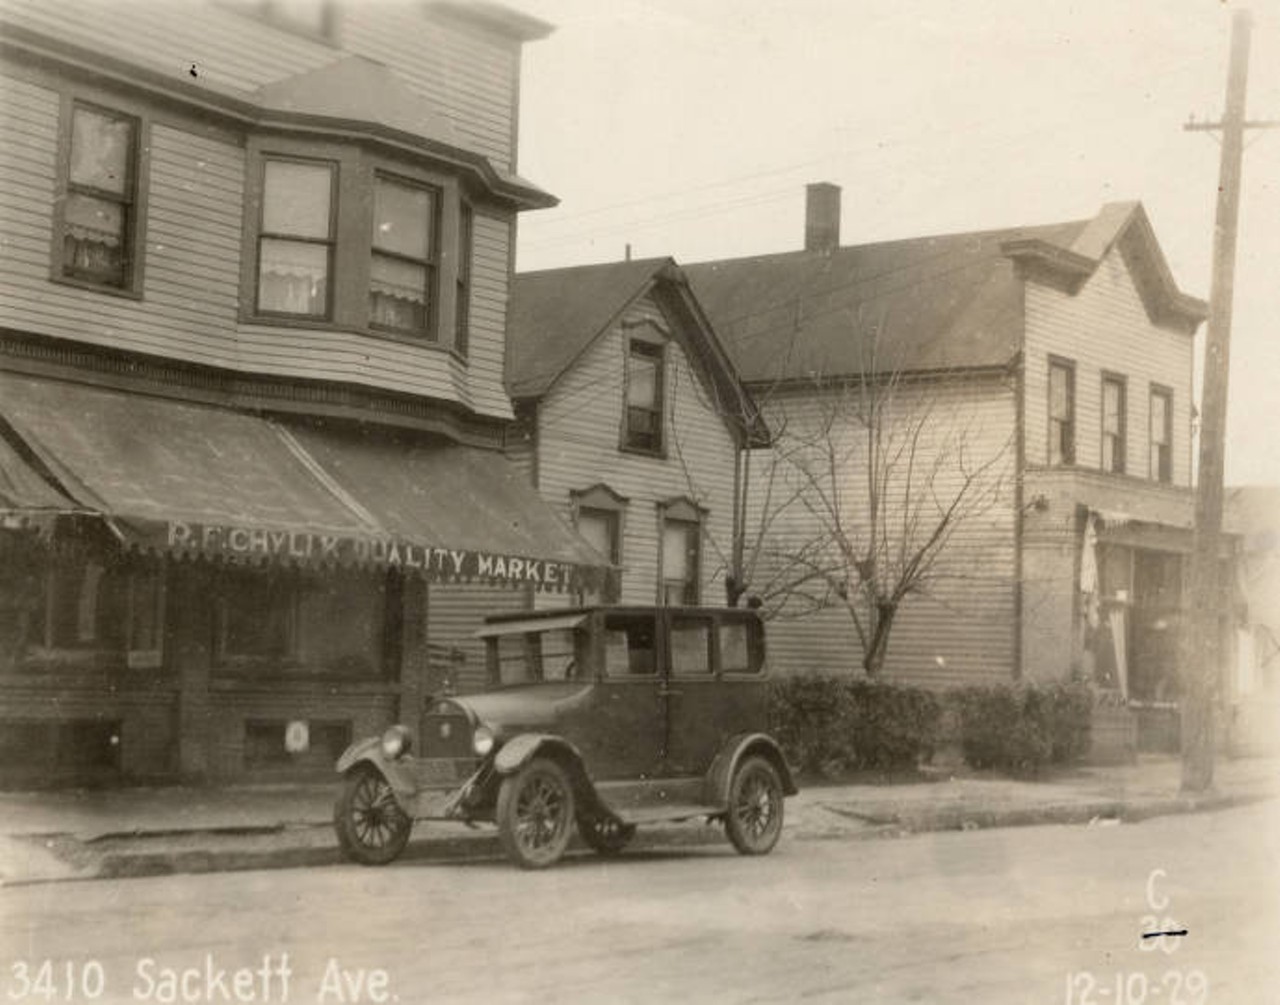 R.F. Chylik Quality Market, 3410 Sackett Avenue, 1929.